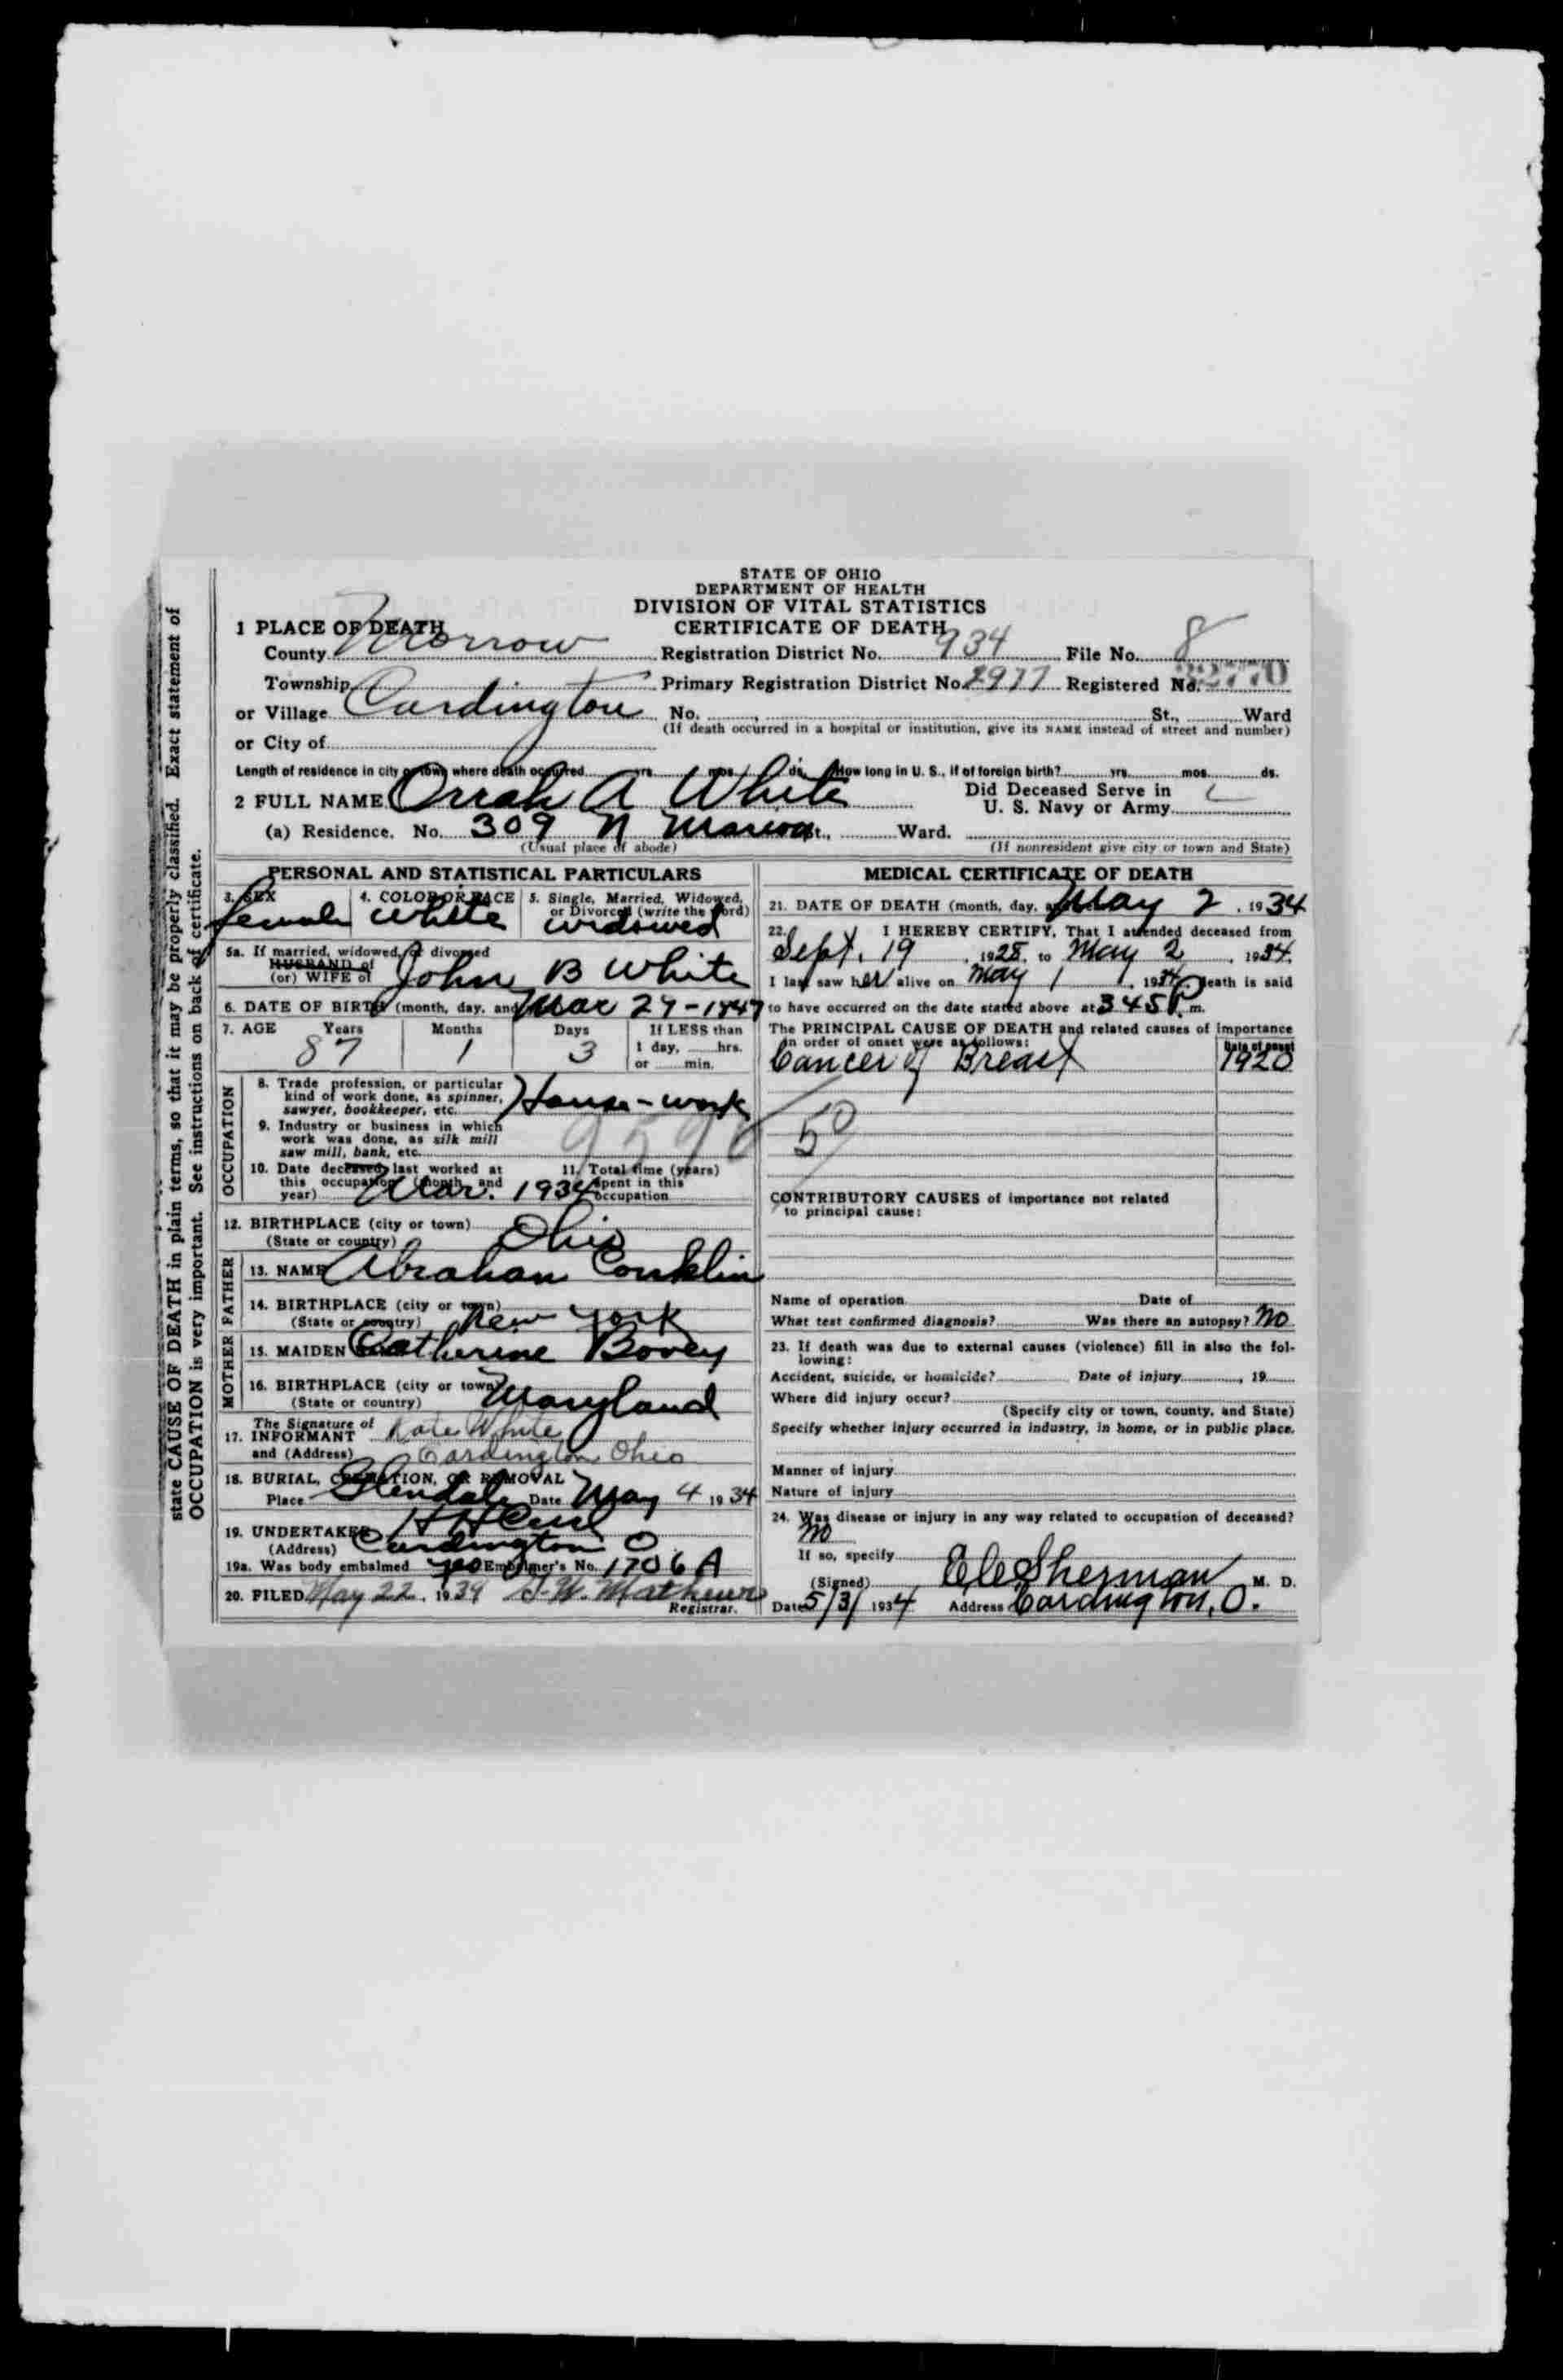 Orrah A White Death Certificate